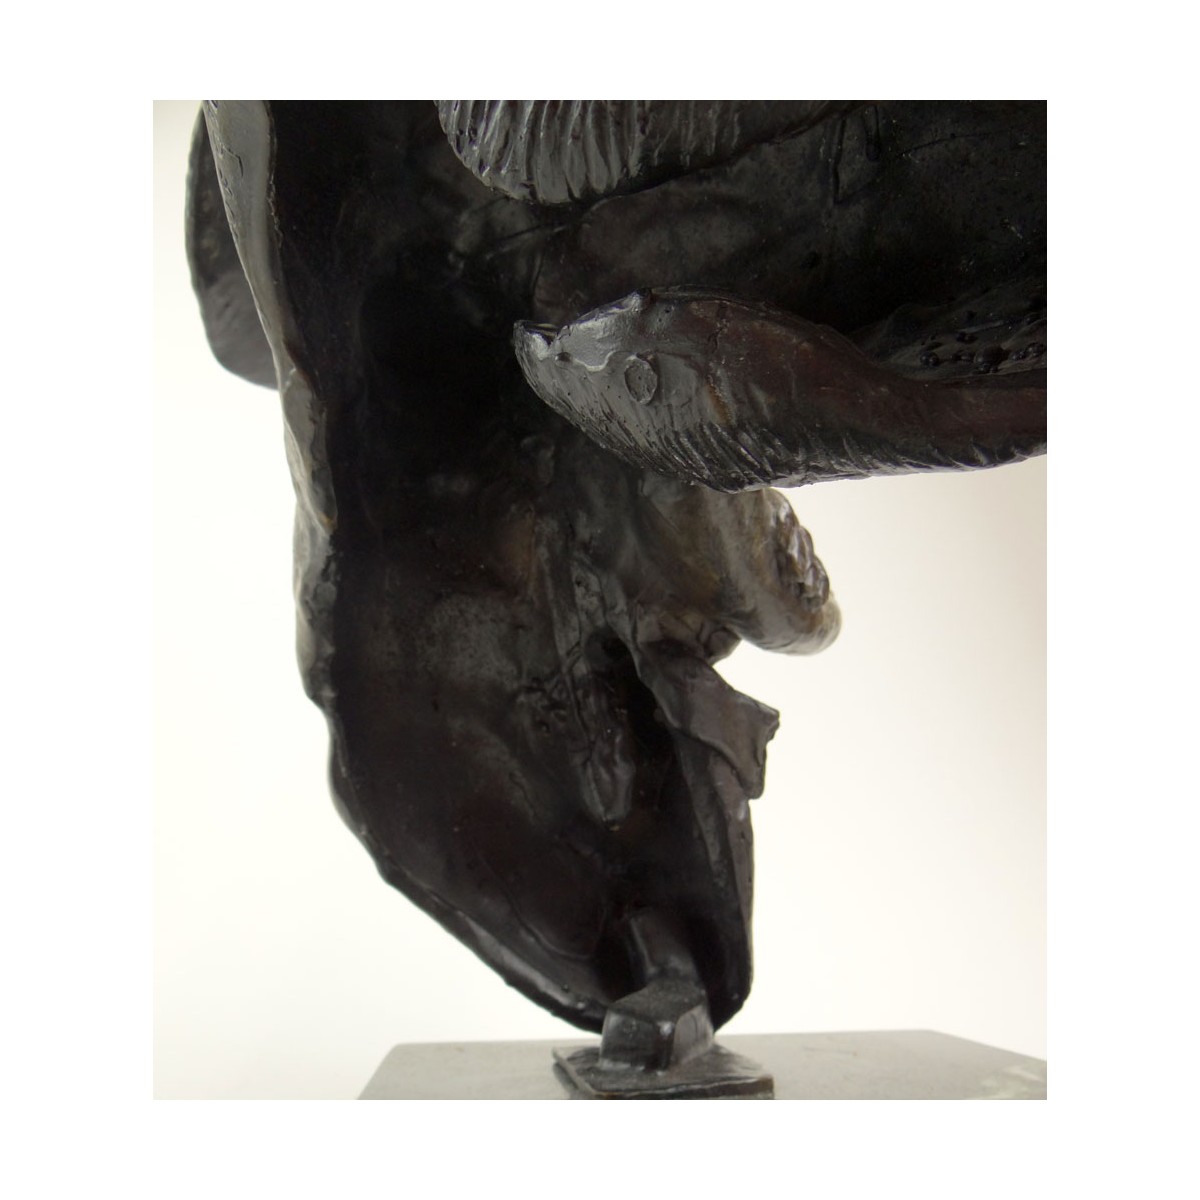 Paul Wegner Bronze Sculpture "Takedown"